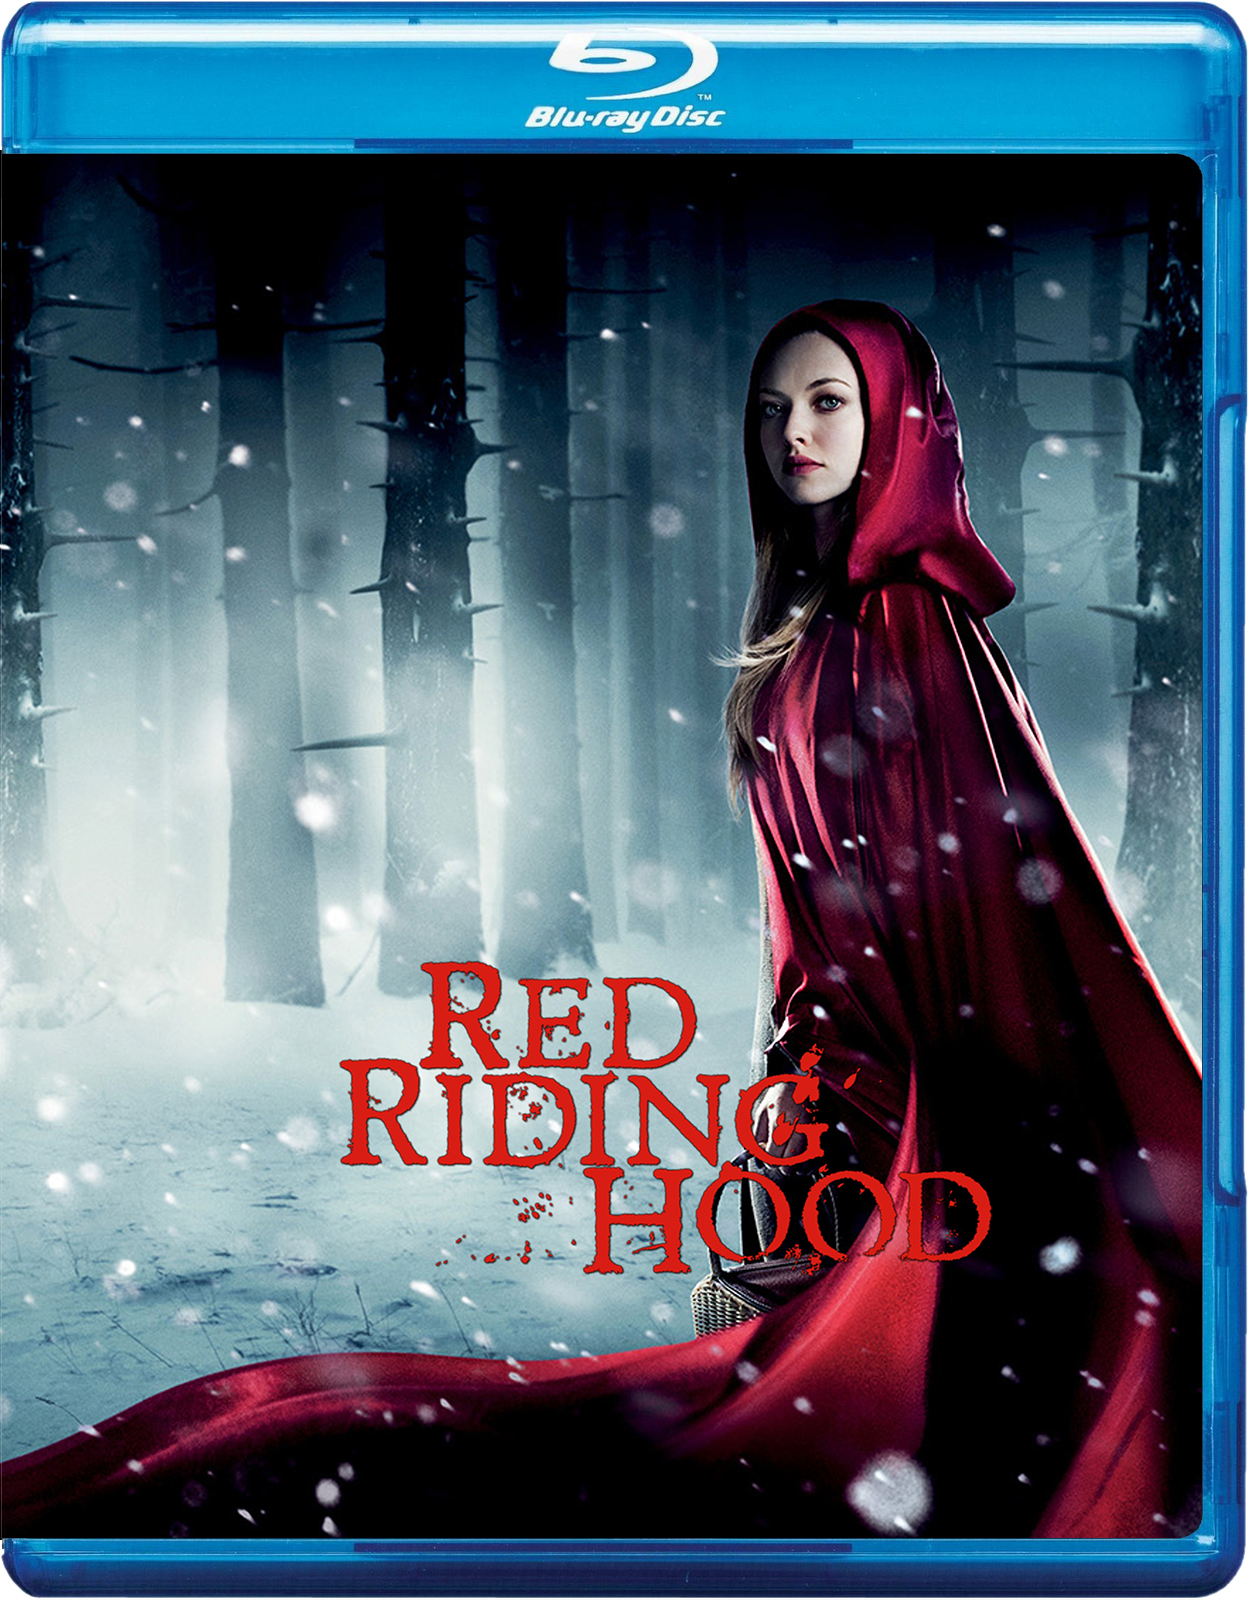 Stiahni si HD Filmy Cervena Karkulka/ Red Riding Hood (2011)(CZ/EN)[1080pHD]